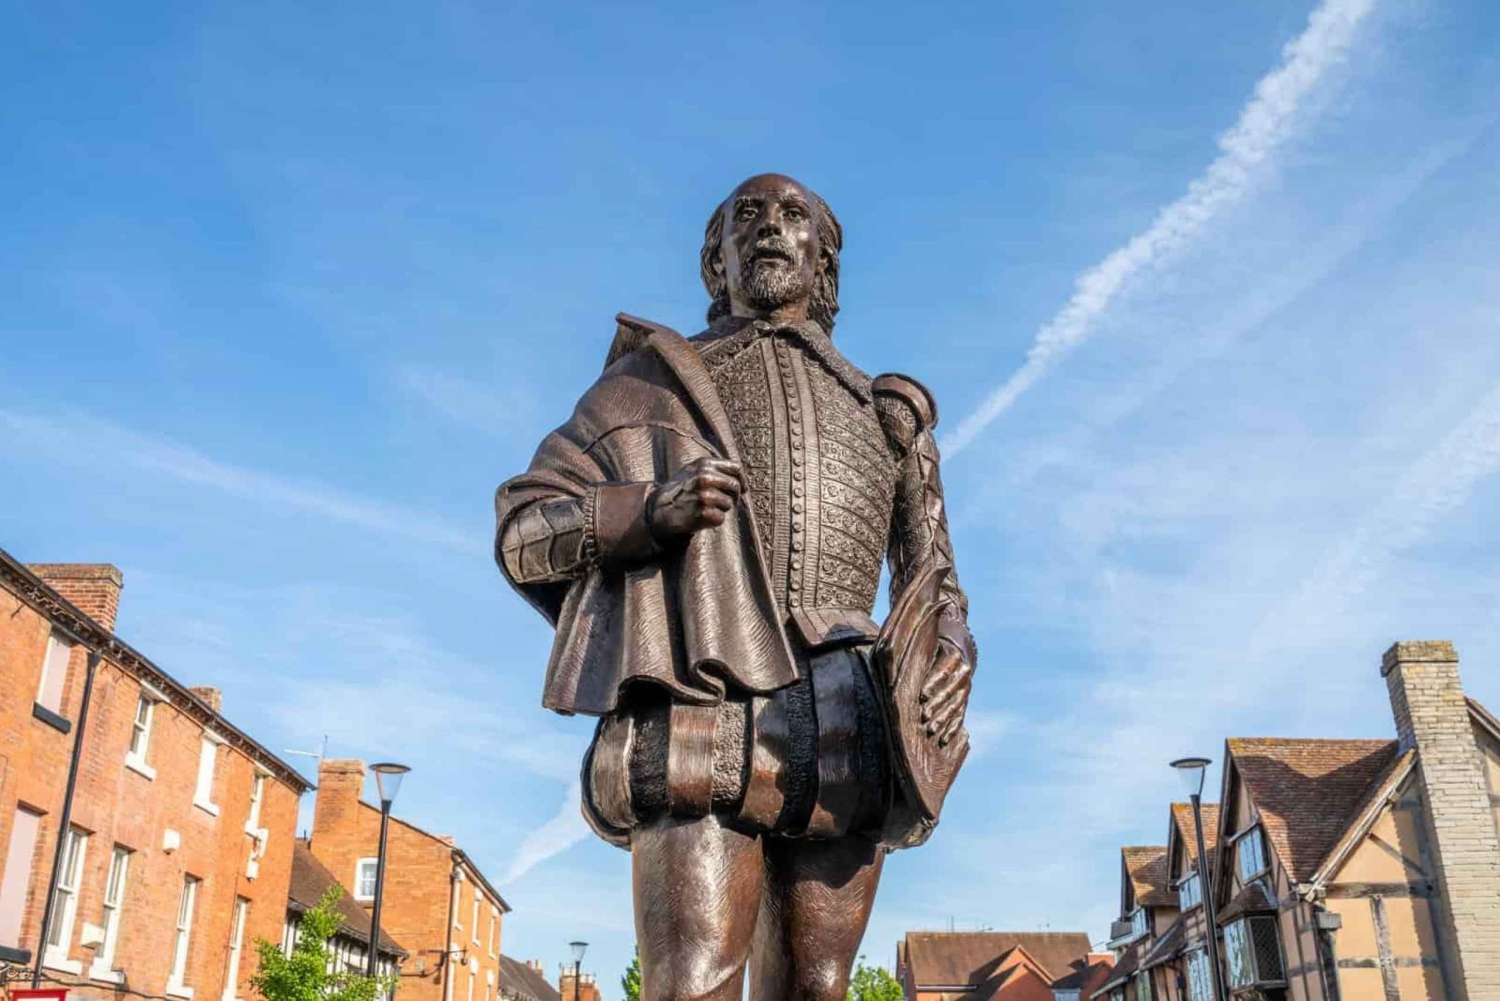 Starford-Upon-Avon: Historisk rundtur i Shakespeares födelseplats